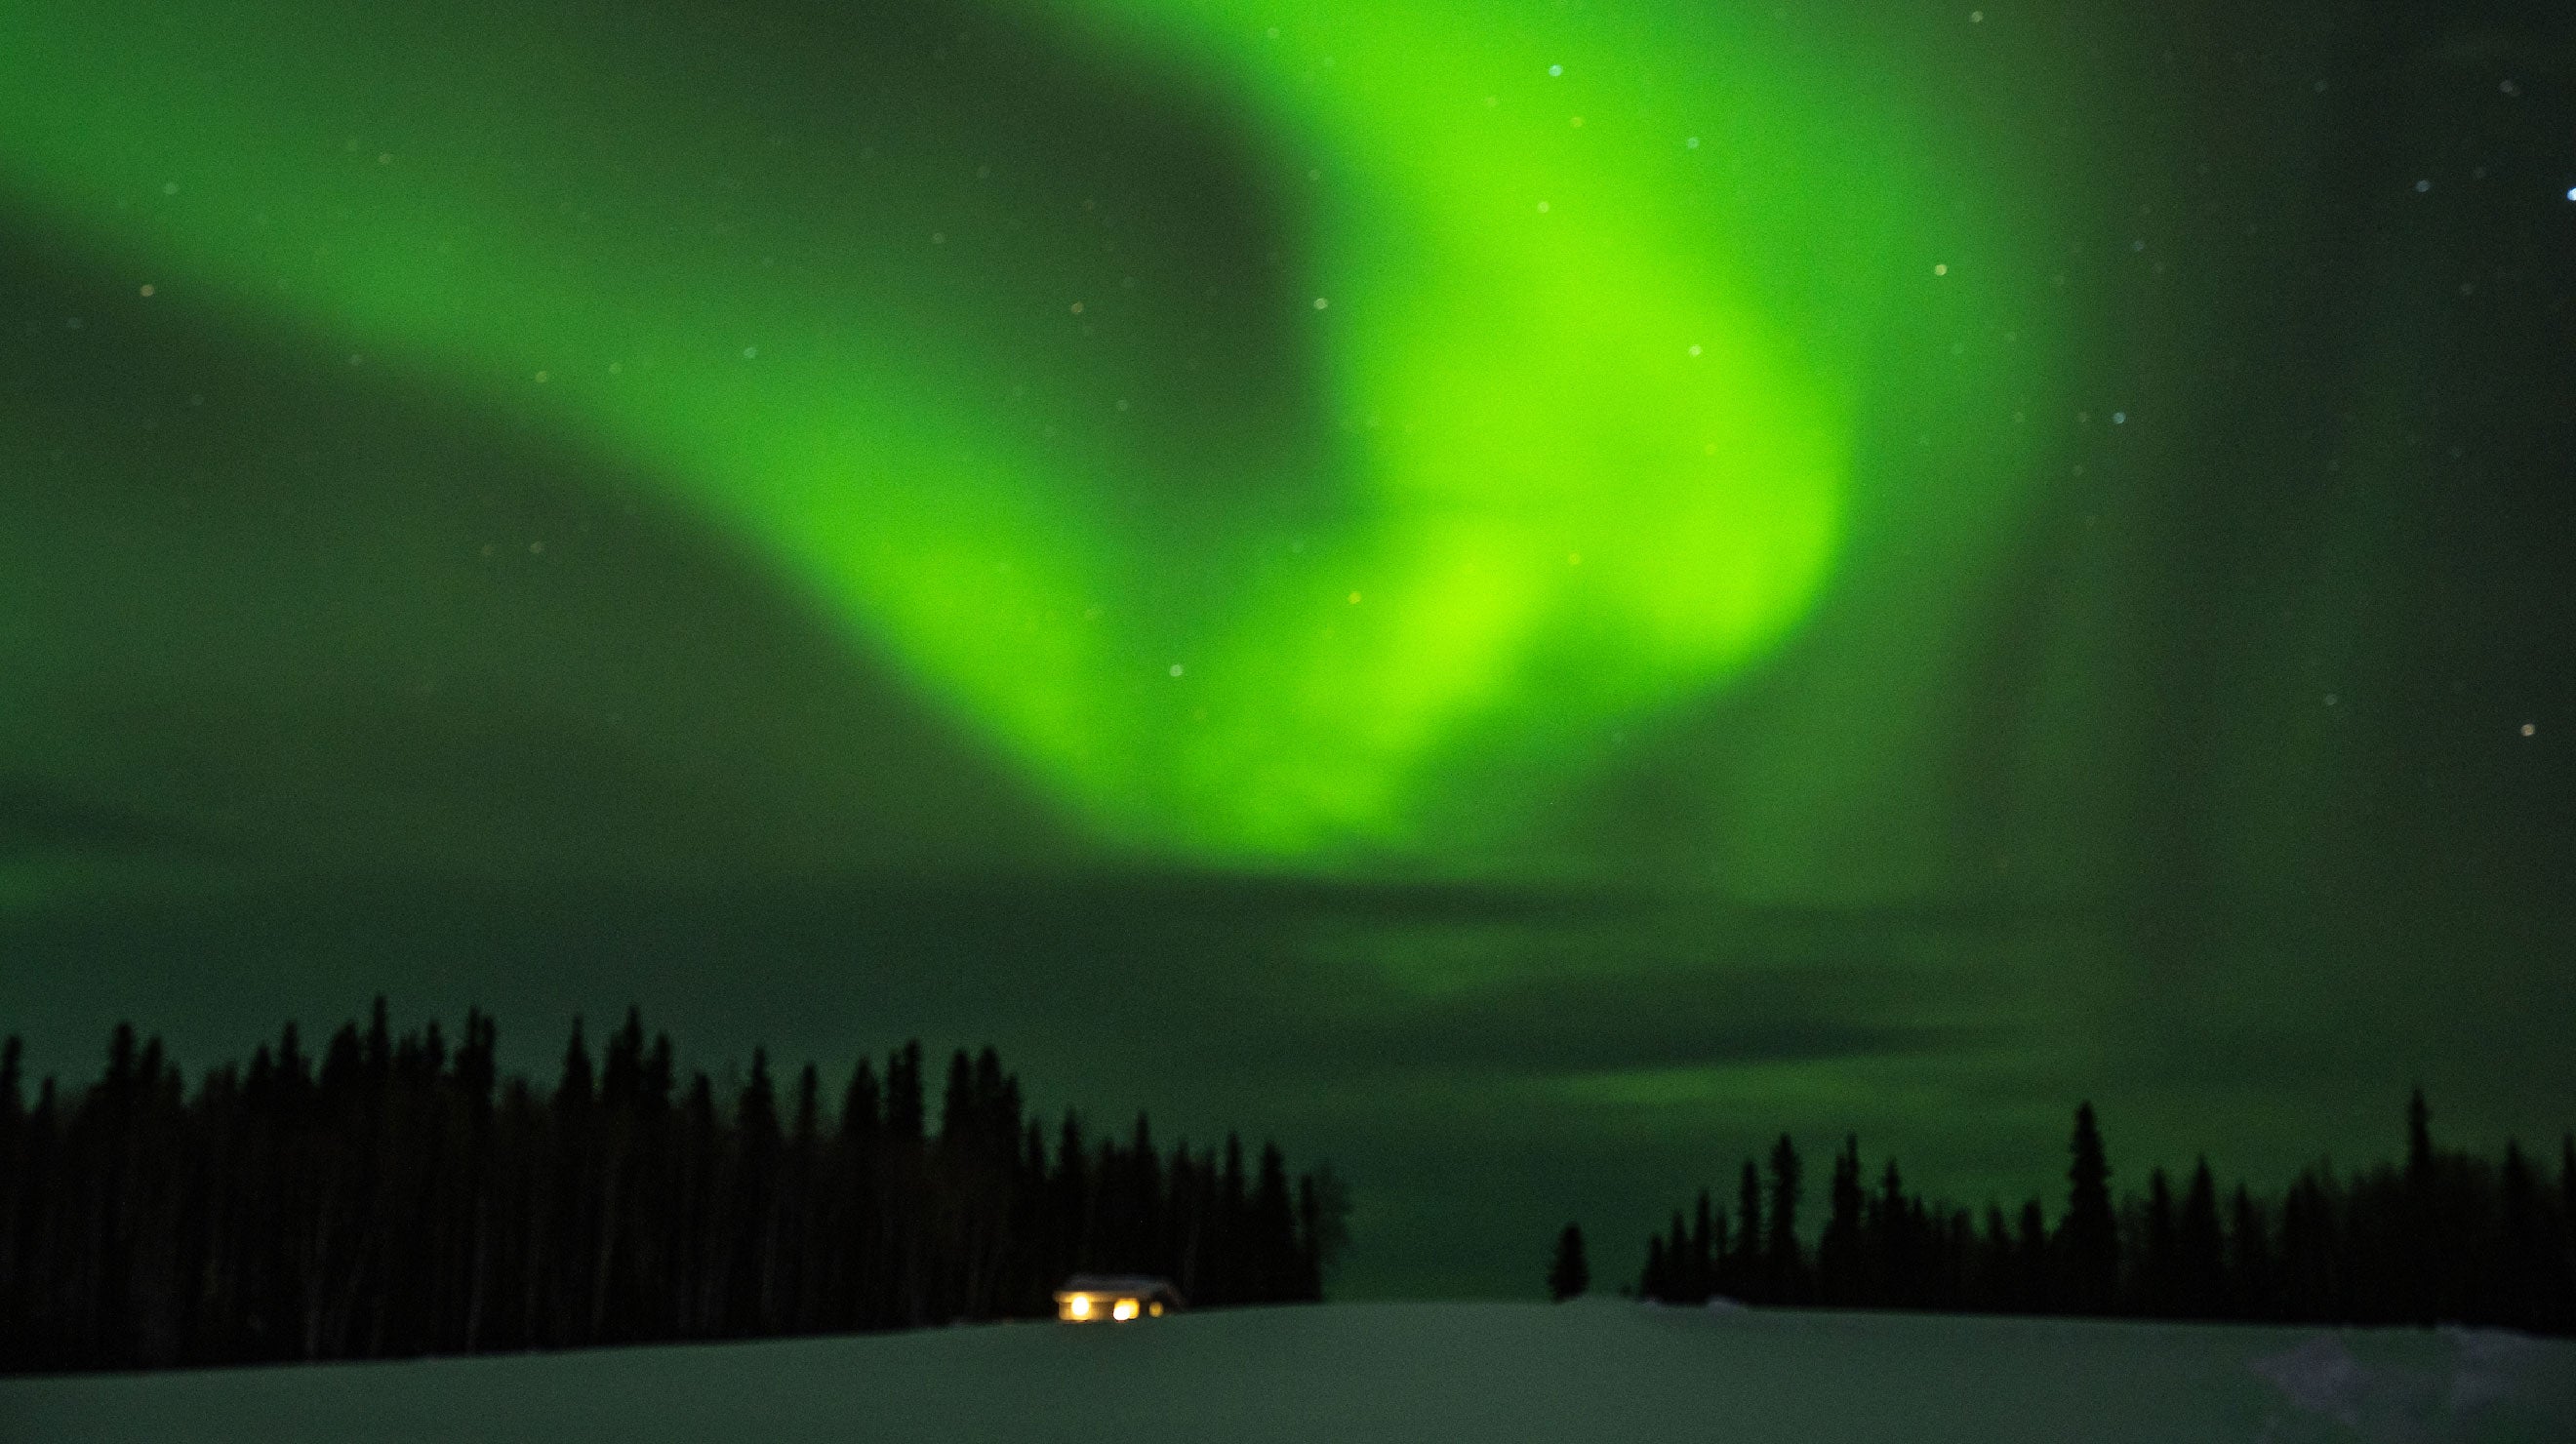 aurora borealis in Alaska